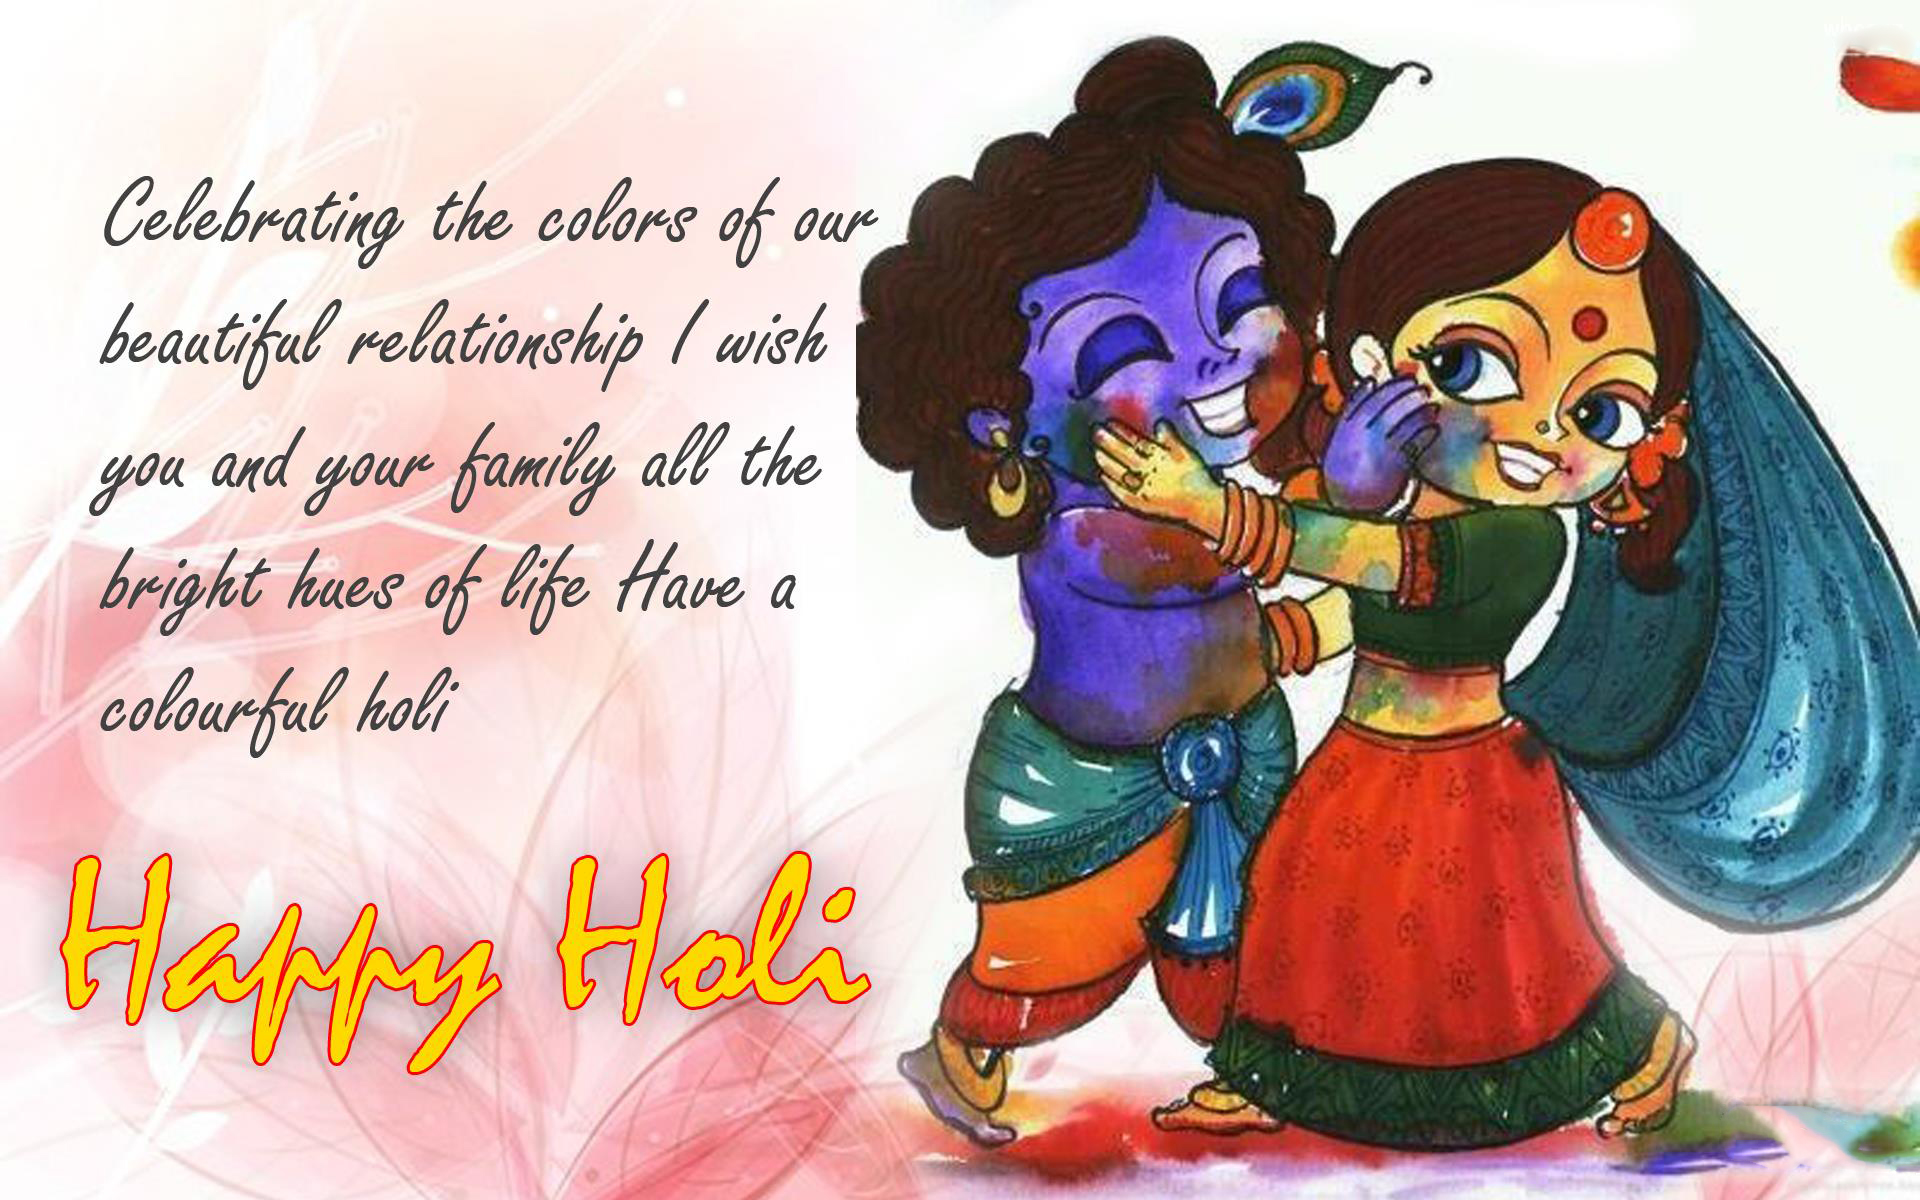 happy holi dhuleti 2016 greeting message